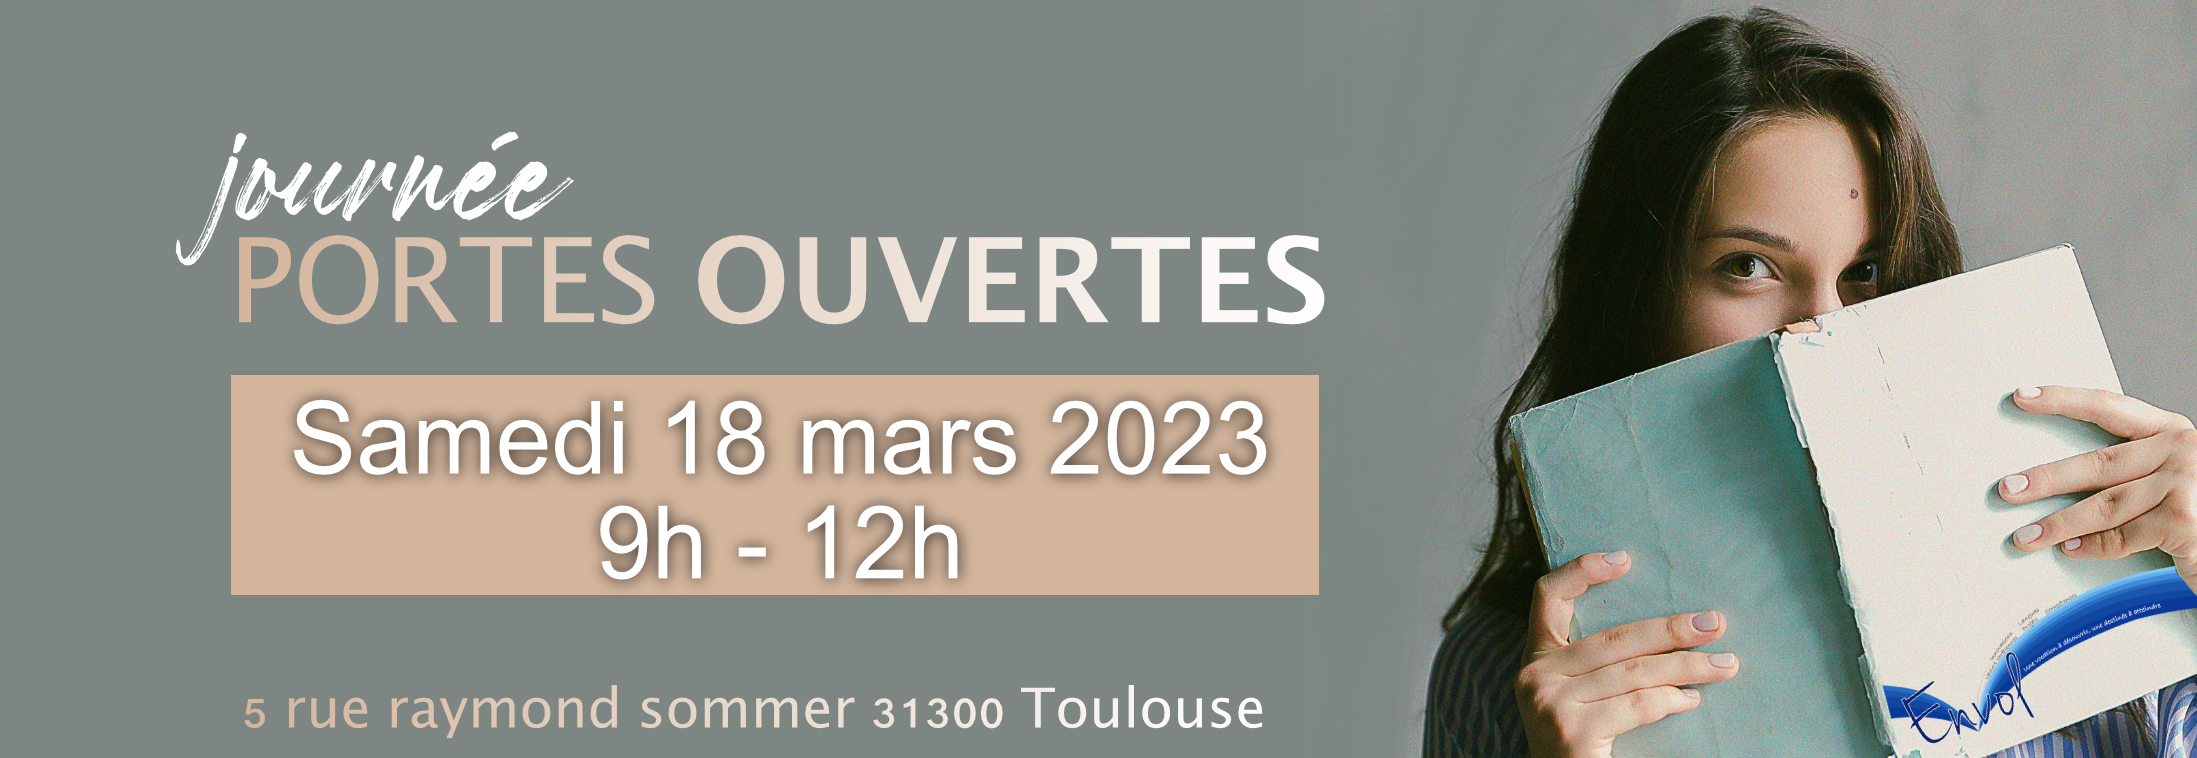 PorteOuvertes-2023